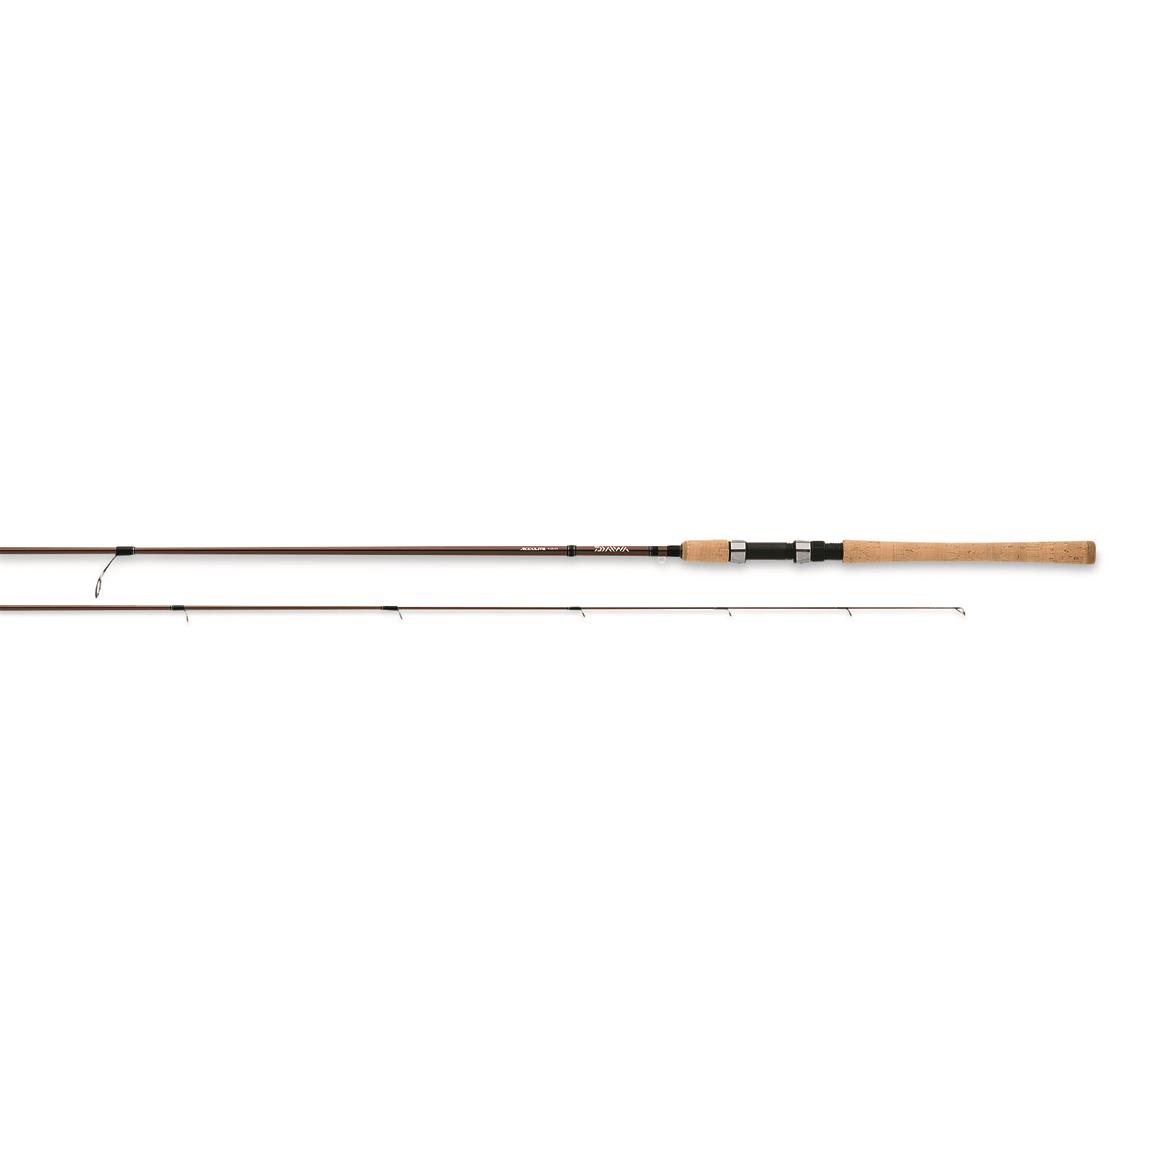 Daiwa Acculite Salmon/Trout/Steelhead Spinning Rod, 8'6 Length, Medium Power, Fast Action, 2 Pieces